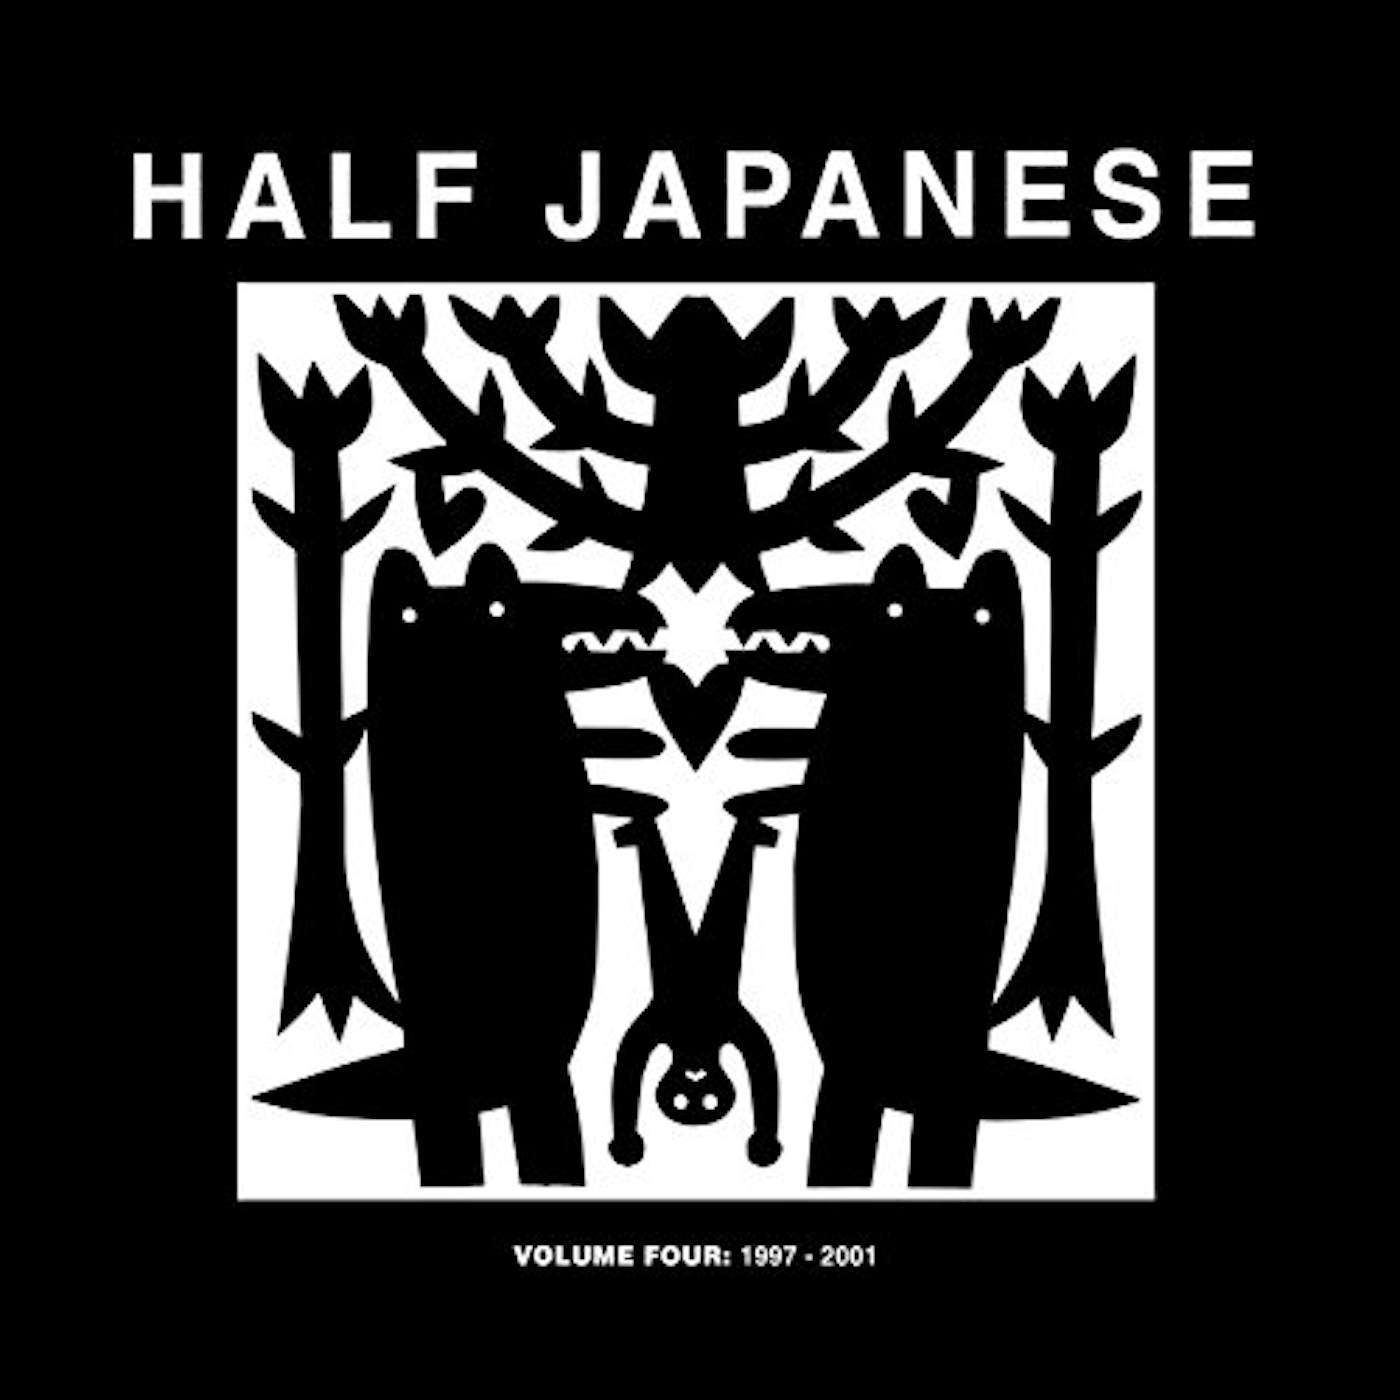 Half Japanese VOLUME FOUR: 1997-2001 CD